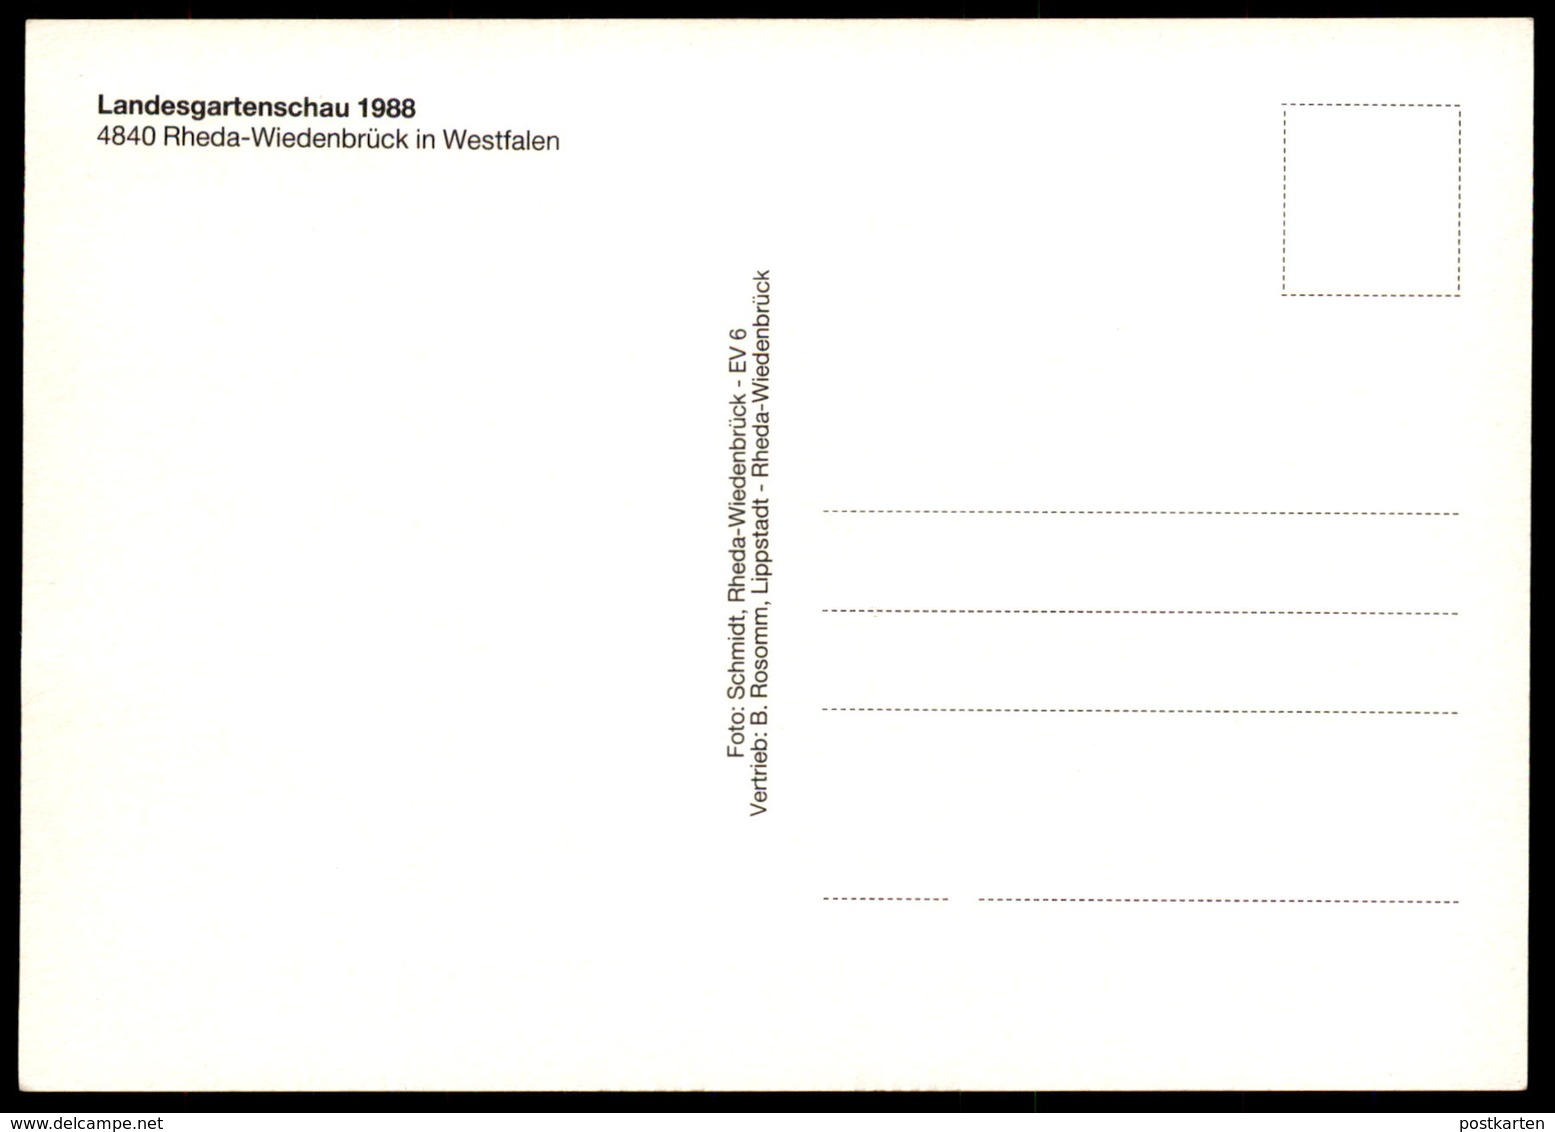 ÄLTERE POSTKARTE LANDESGARTENSCHAU 1988 REHDA-WIEDENBRÜCK Narzissen Narzisse Daffodil Cpa Postcard AK Ansichtskarte - Rheda-Wiedenbrück